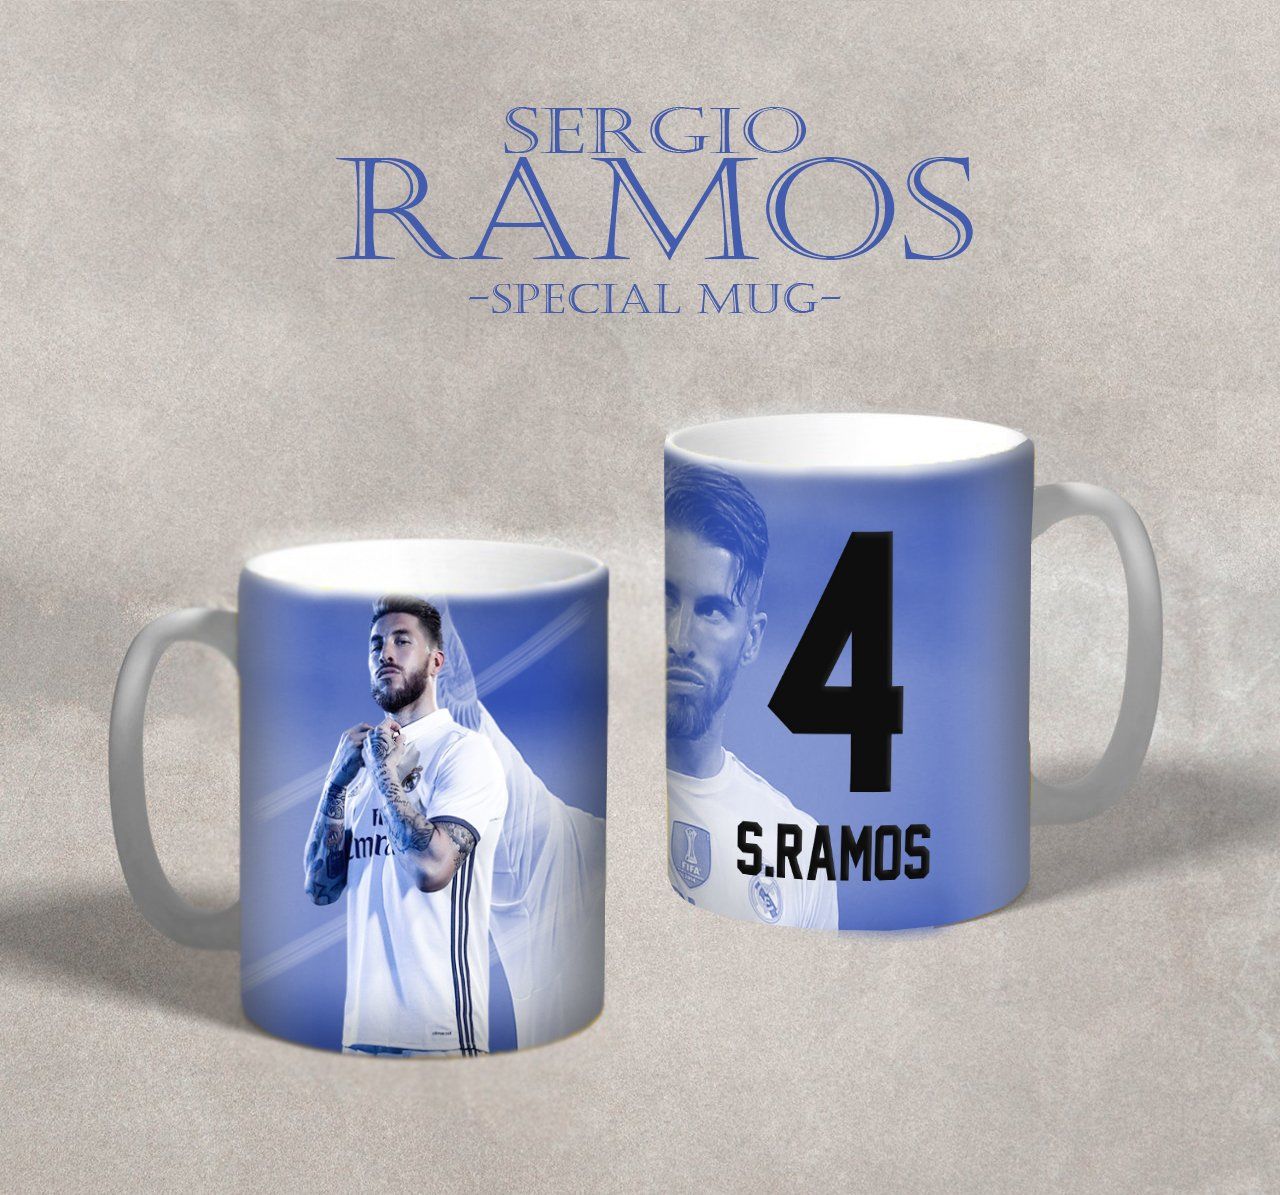 S.Ramos